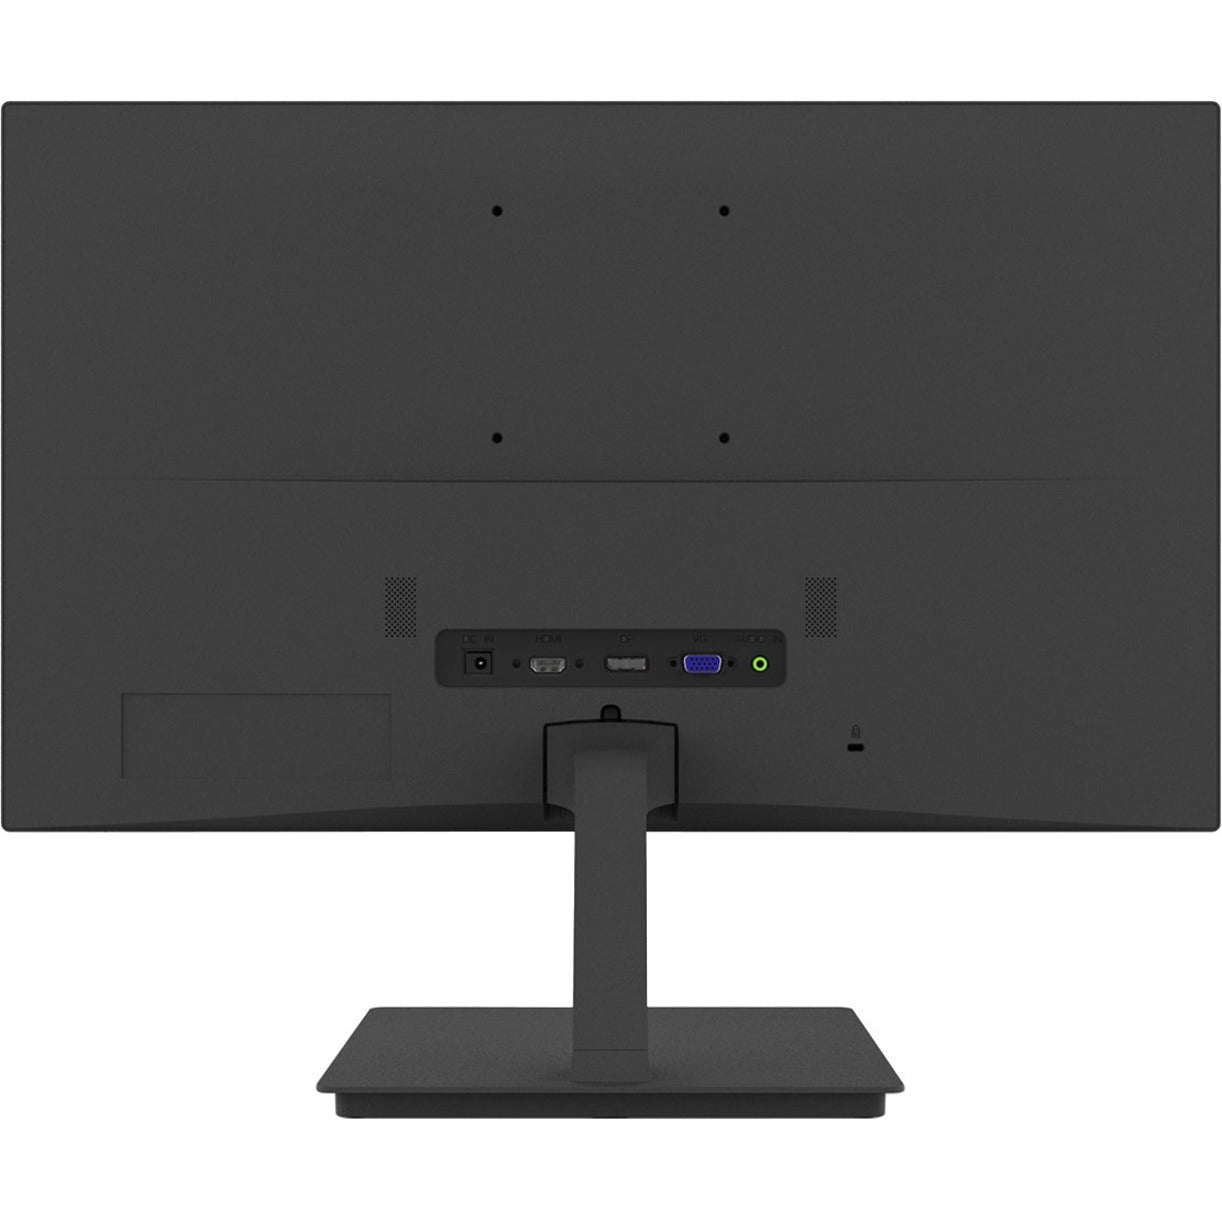 Planar 998-0410-00 PXN2480MW Widescreen LCD Monitor, 24" FHD IPS LED, Narrow Bezel, VGA, HDMI, DP, Speakers